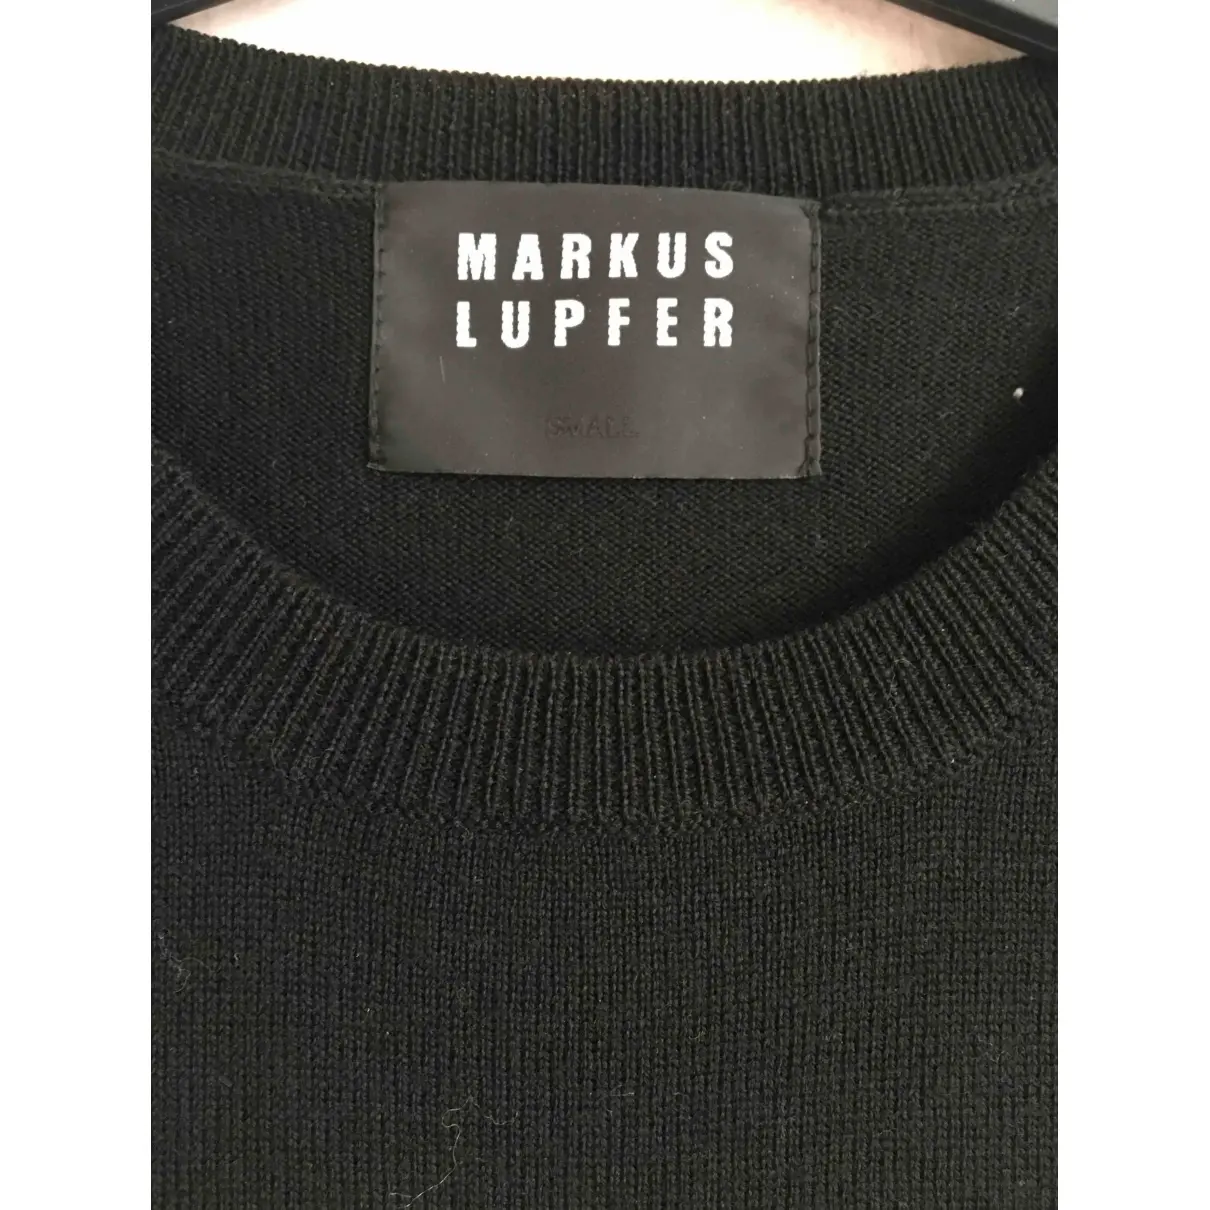 Buy Markus Lupfer Wool jumper online